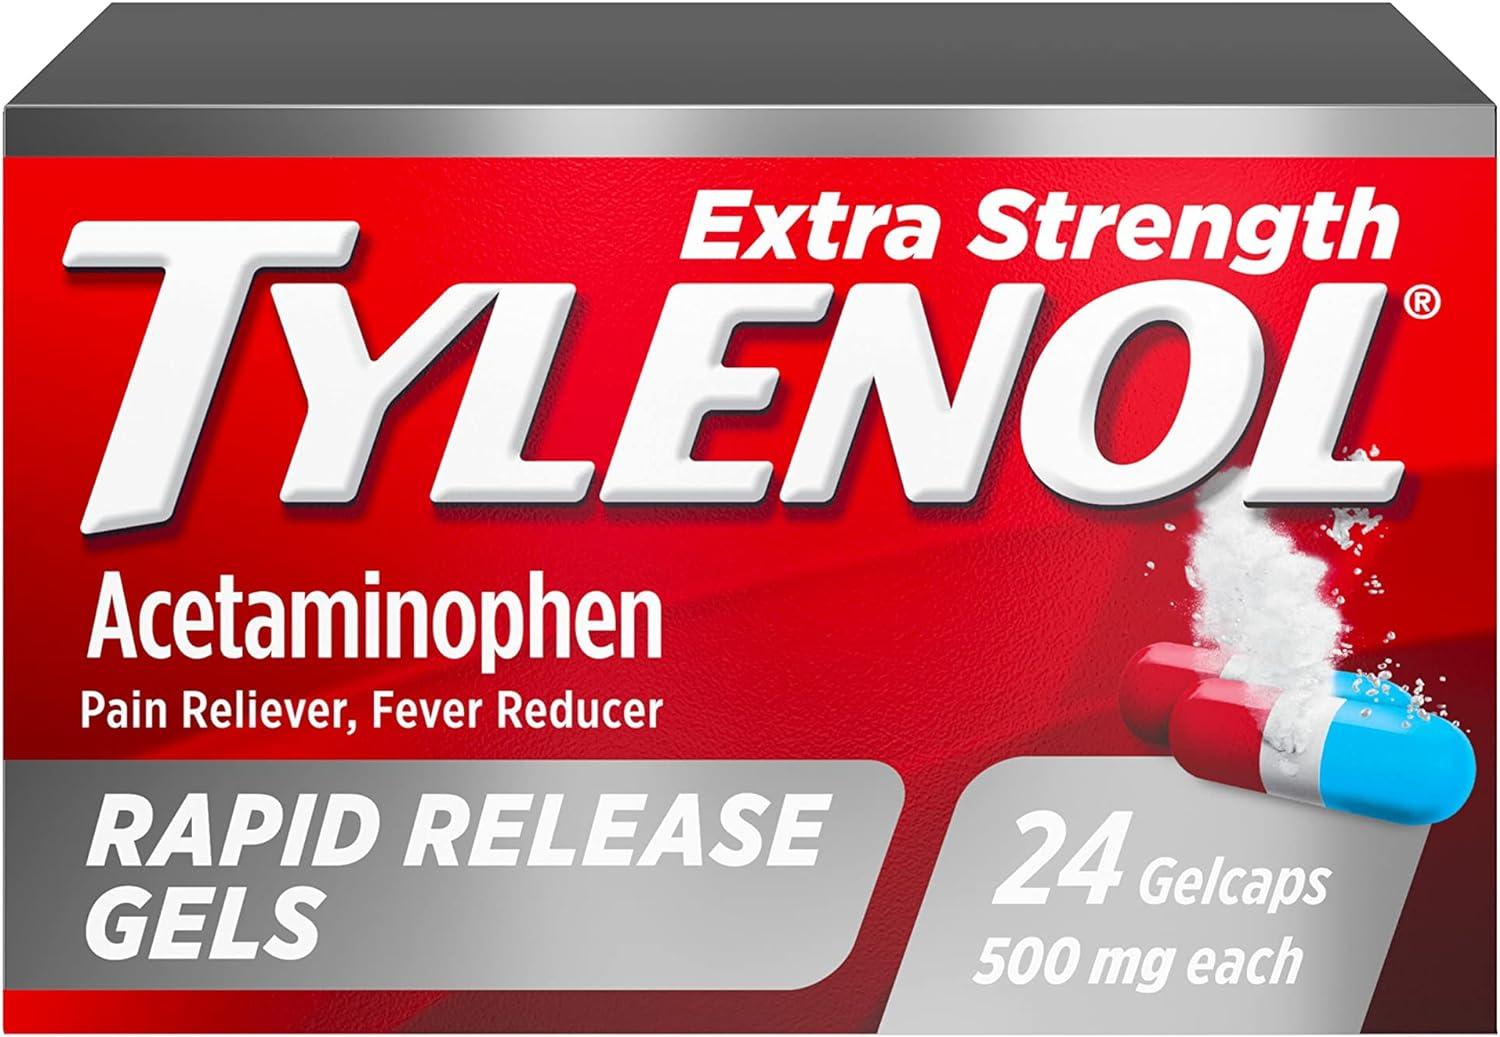 Tylenol Extra Strength Acetaminophen Rapid Release Gels 24 Pack for $2.44